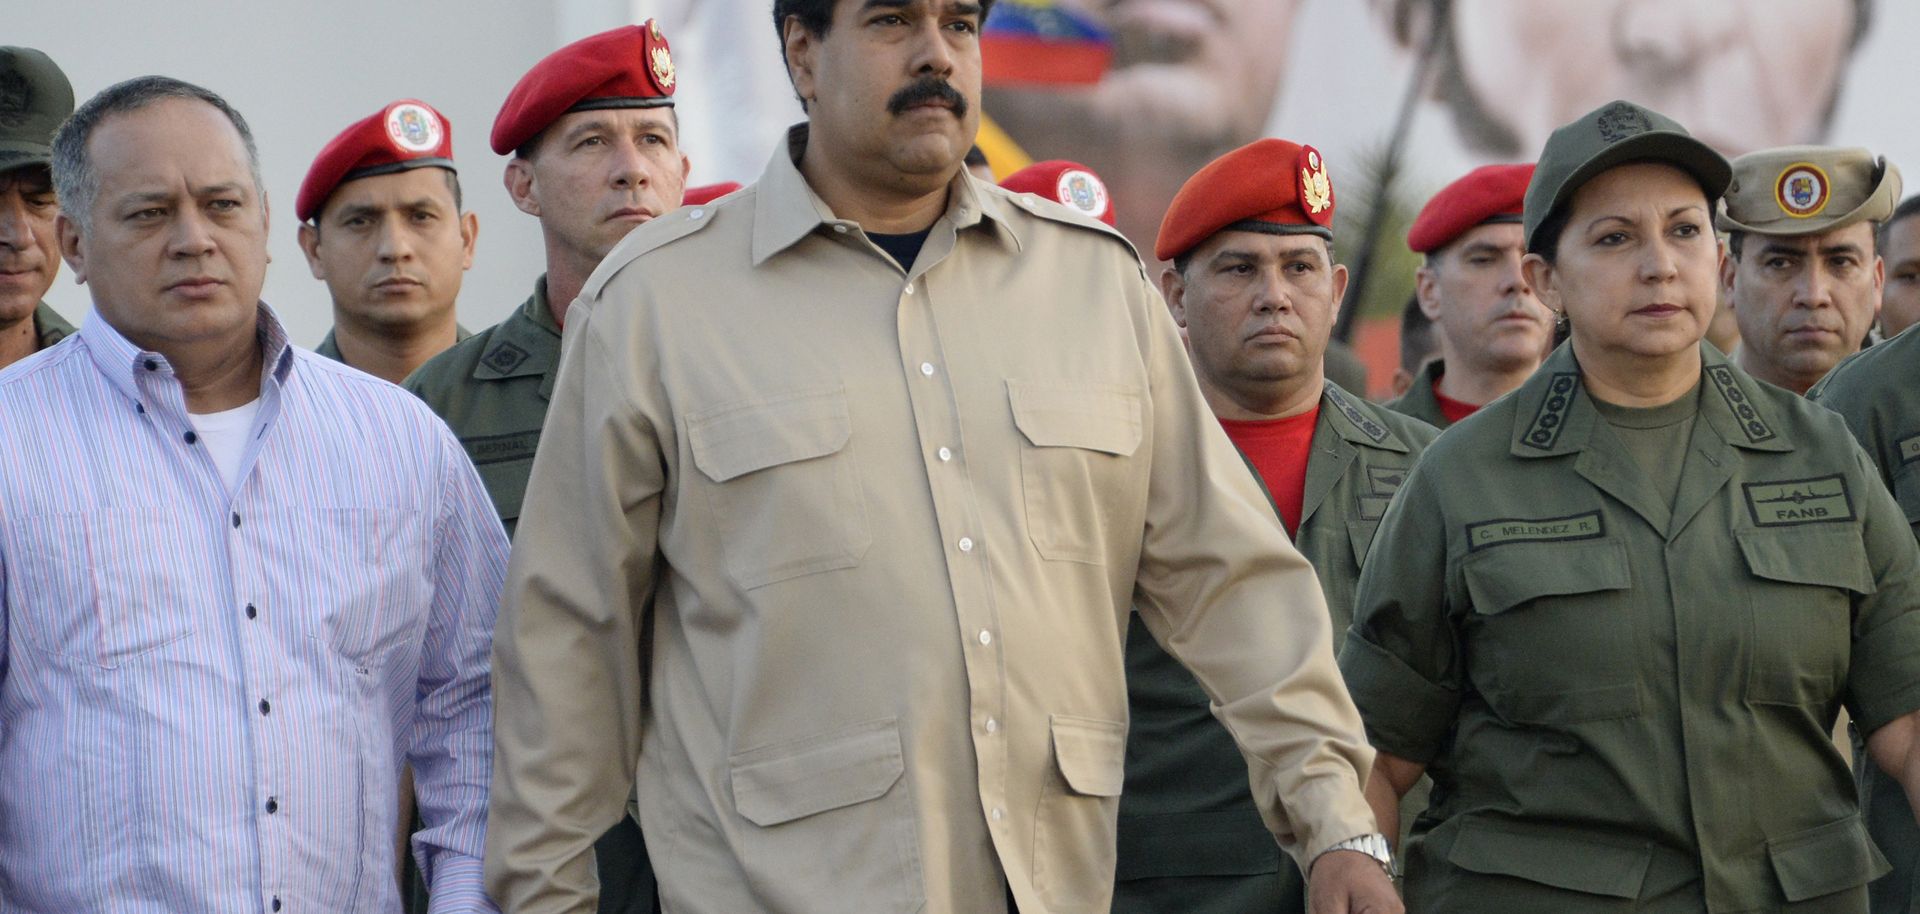 Venezuelan President Nicolas Maduro (C), Venezuelan Parliament President Diosdado Cabello (L) and then-Defense Minister Carmen Melendez (R) attend a military ceremony in Caracas on Dec. 27, 2013. 